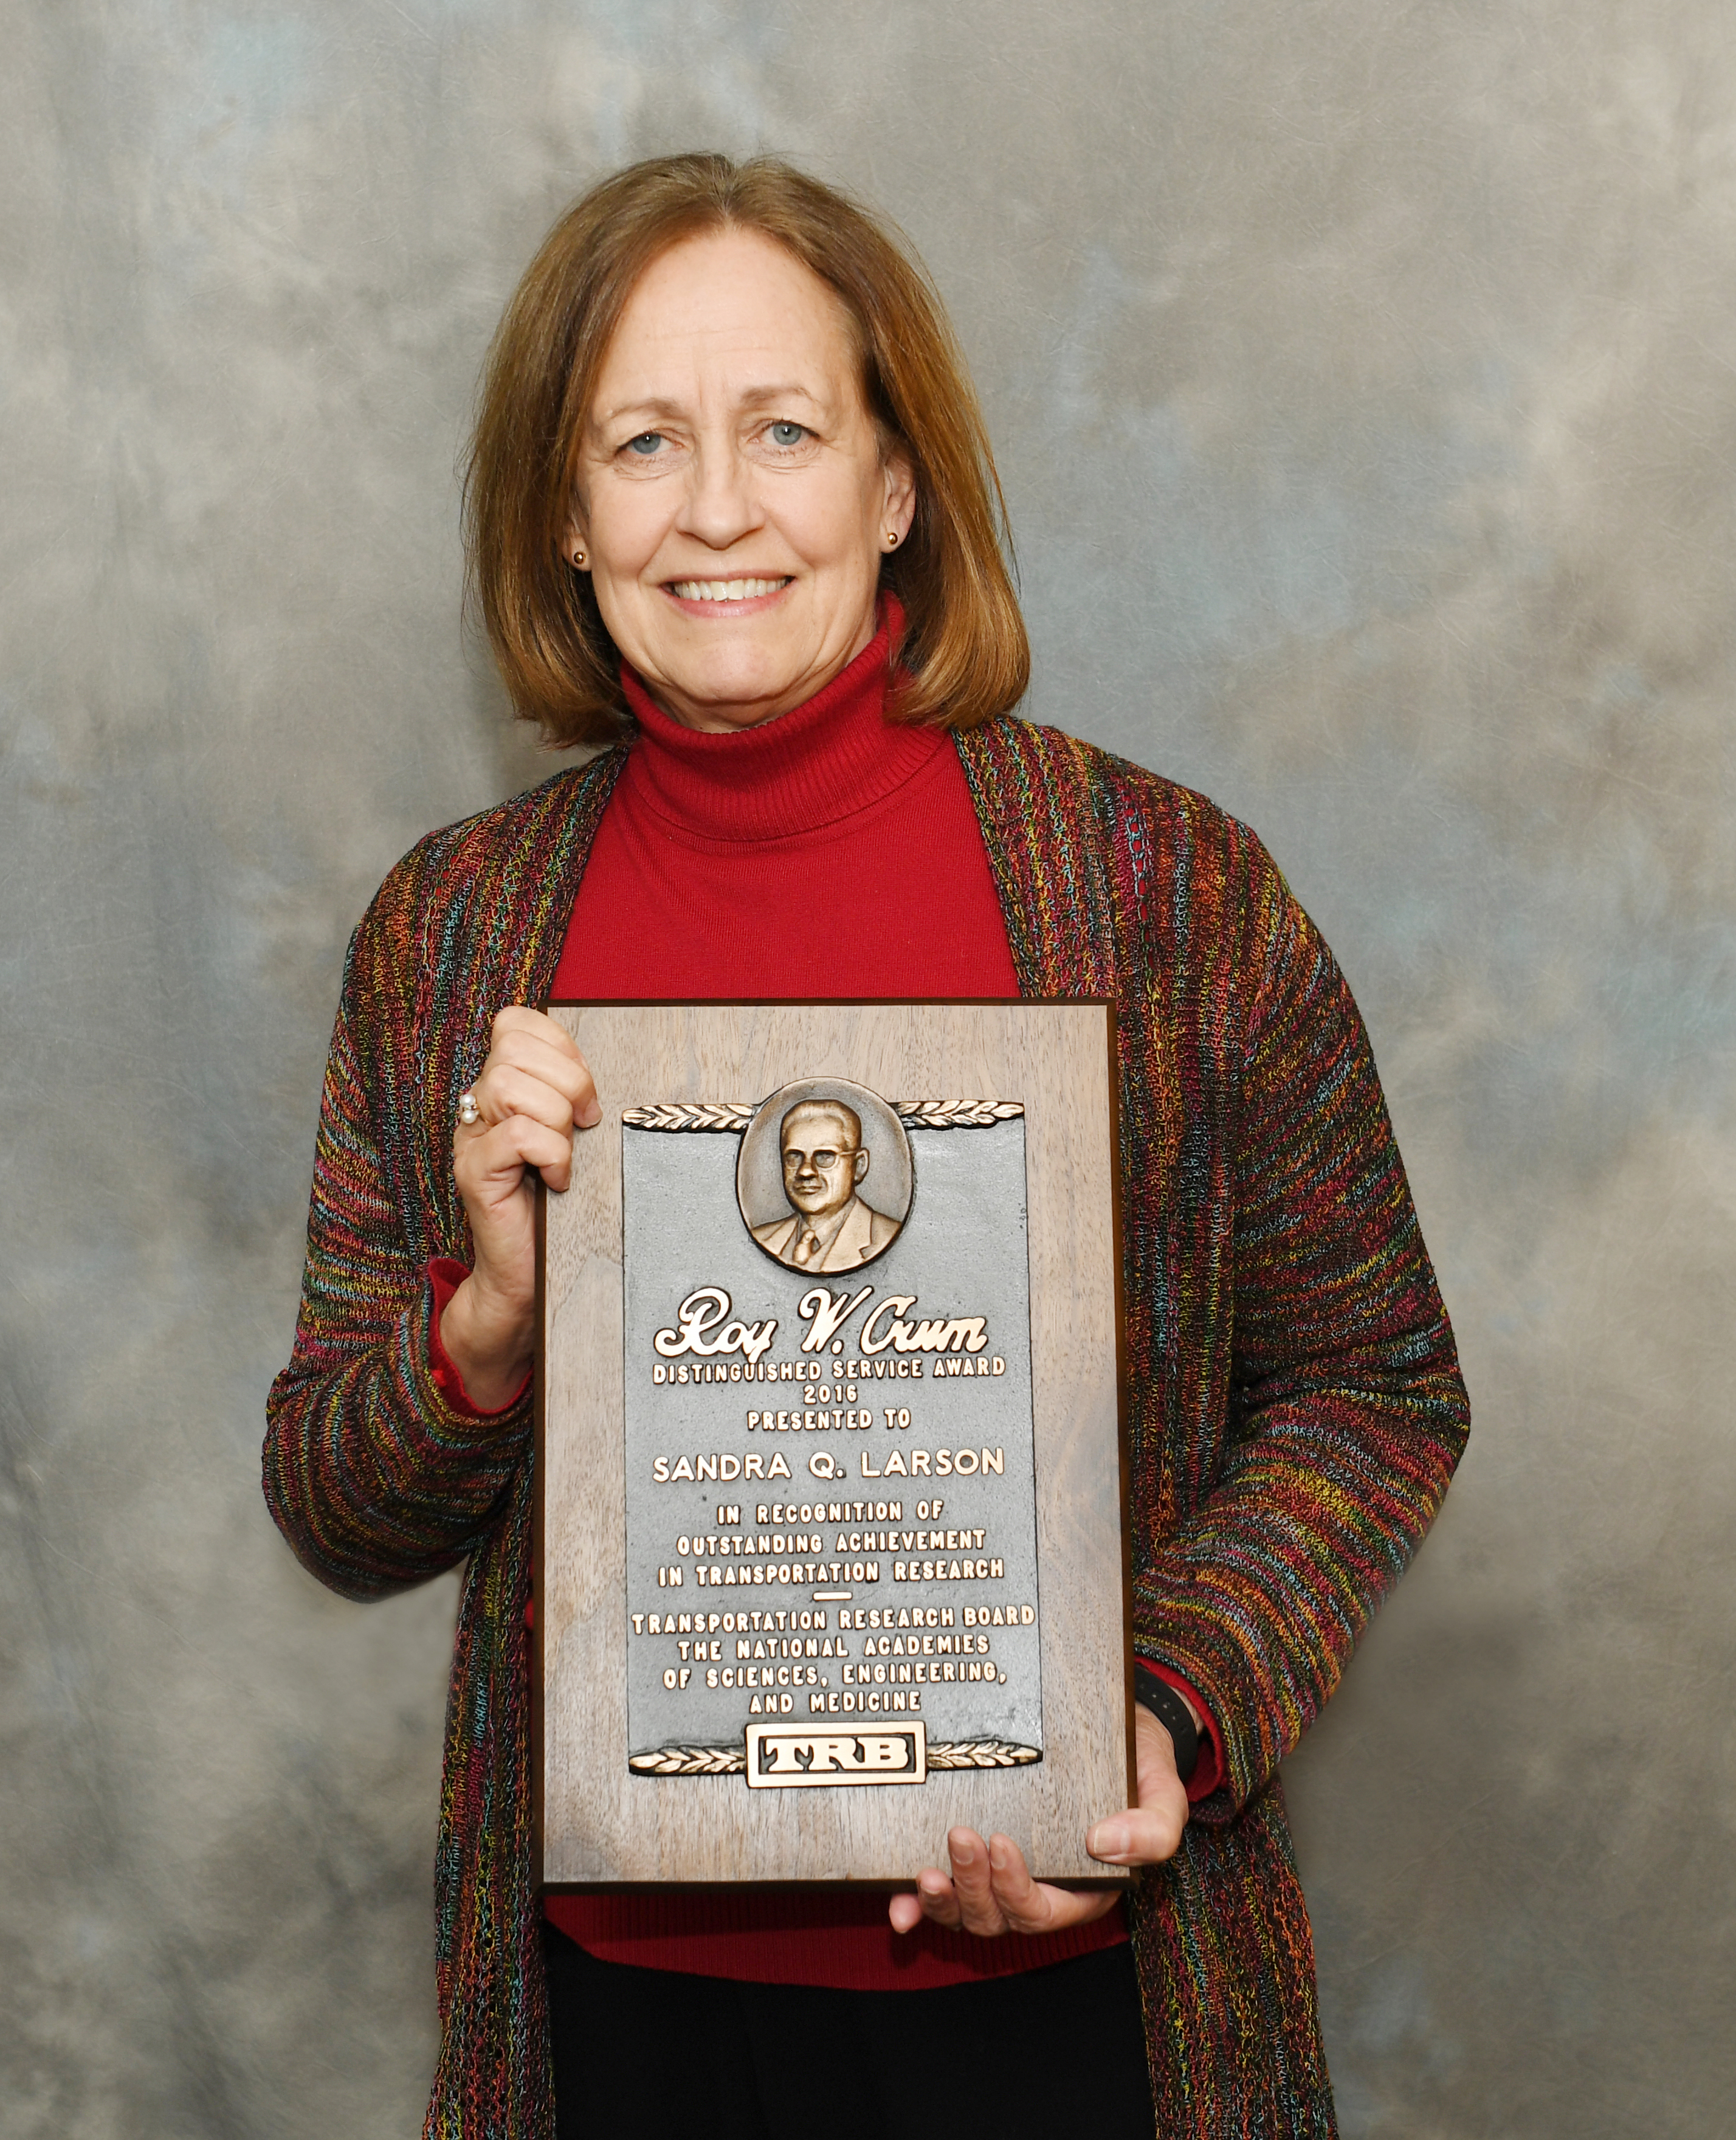 Sandra Larson with Roy W. Crum Distinguished Service Award (Credit: Iowa Department of Transportation)